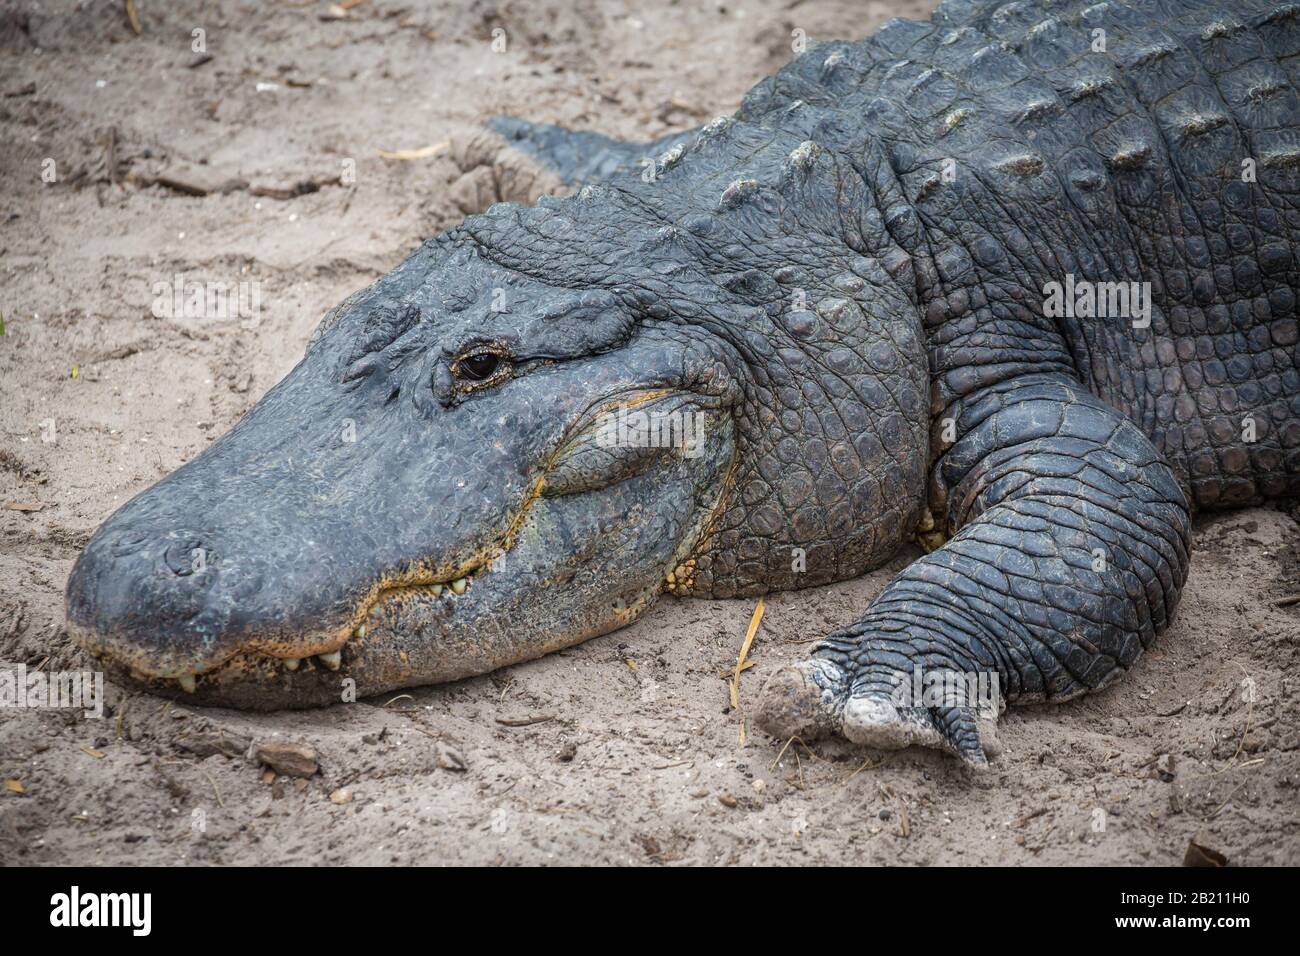 American alligator (Alligator mississippiensis) is located in Sand, portrait, captive, St. Augustine Alligator Farm Zoological Park, St. Augustine Stock Photo